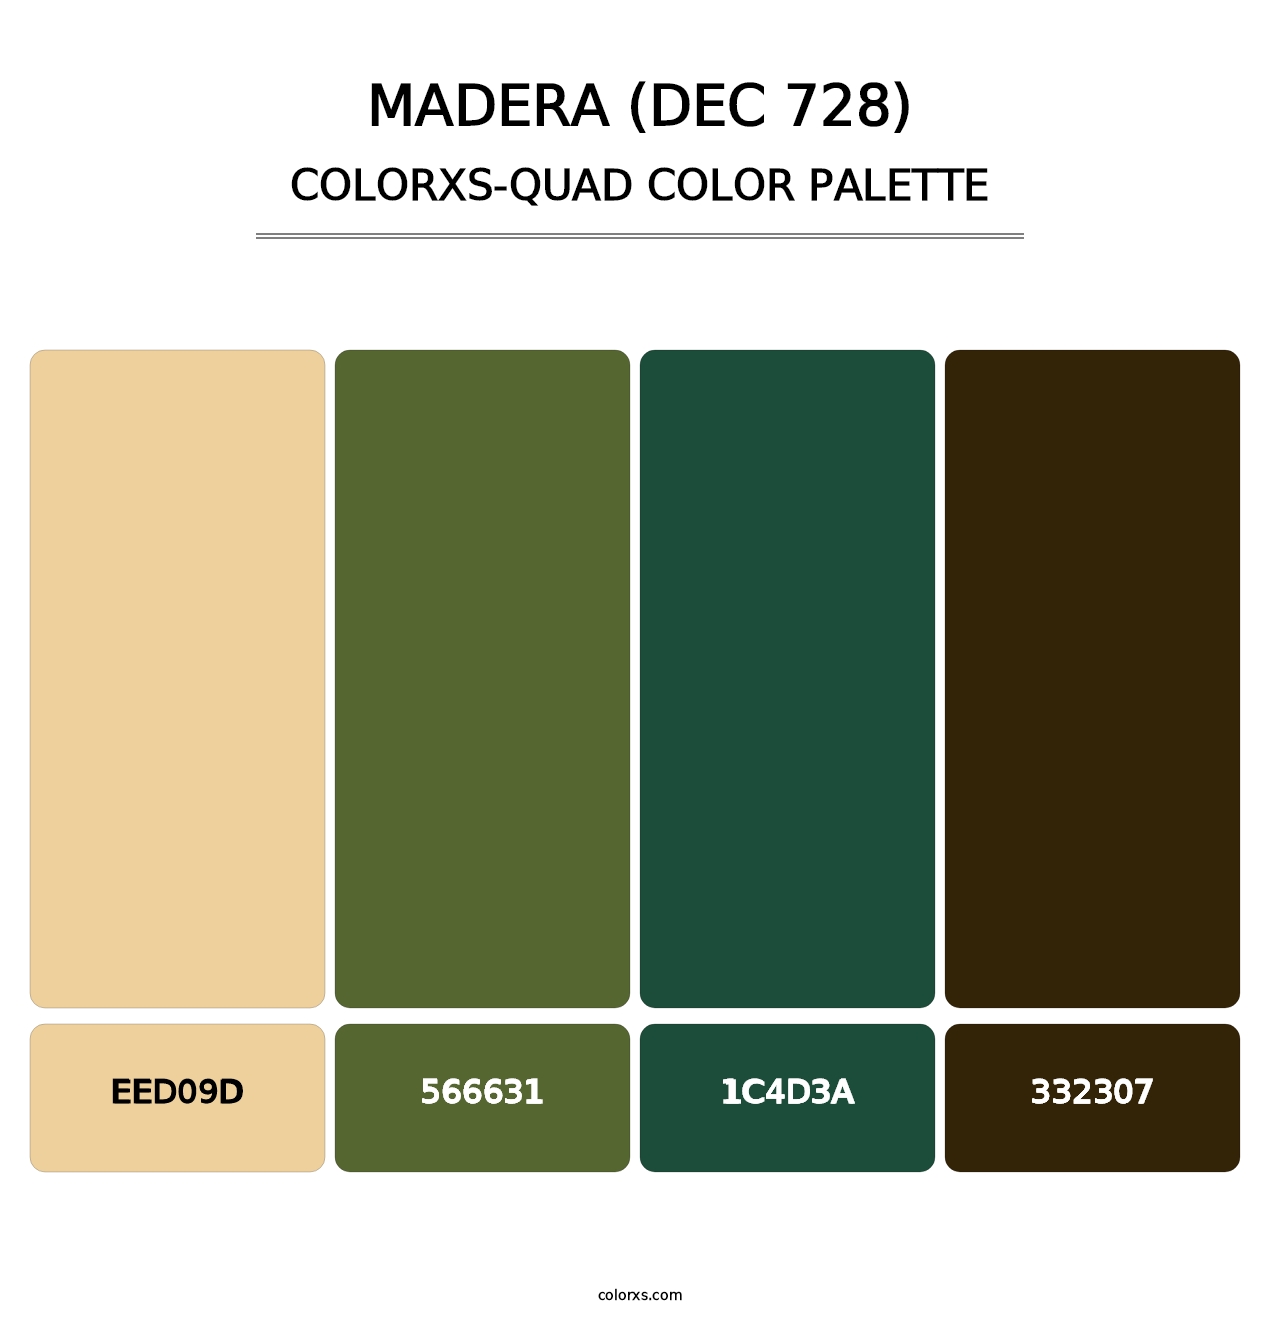 Madera (DEC 728) - Colorxs Quad Palette